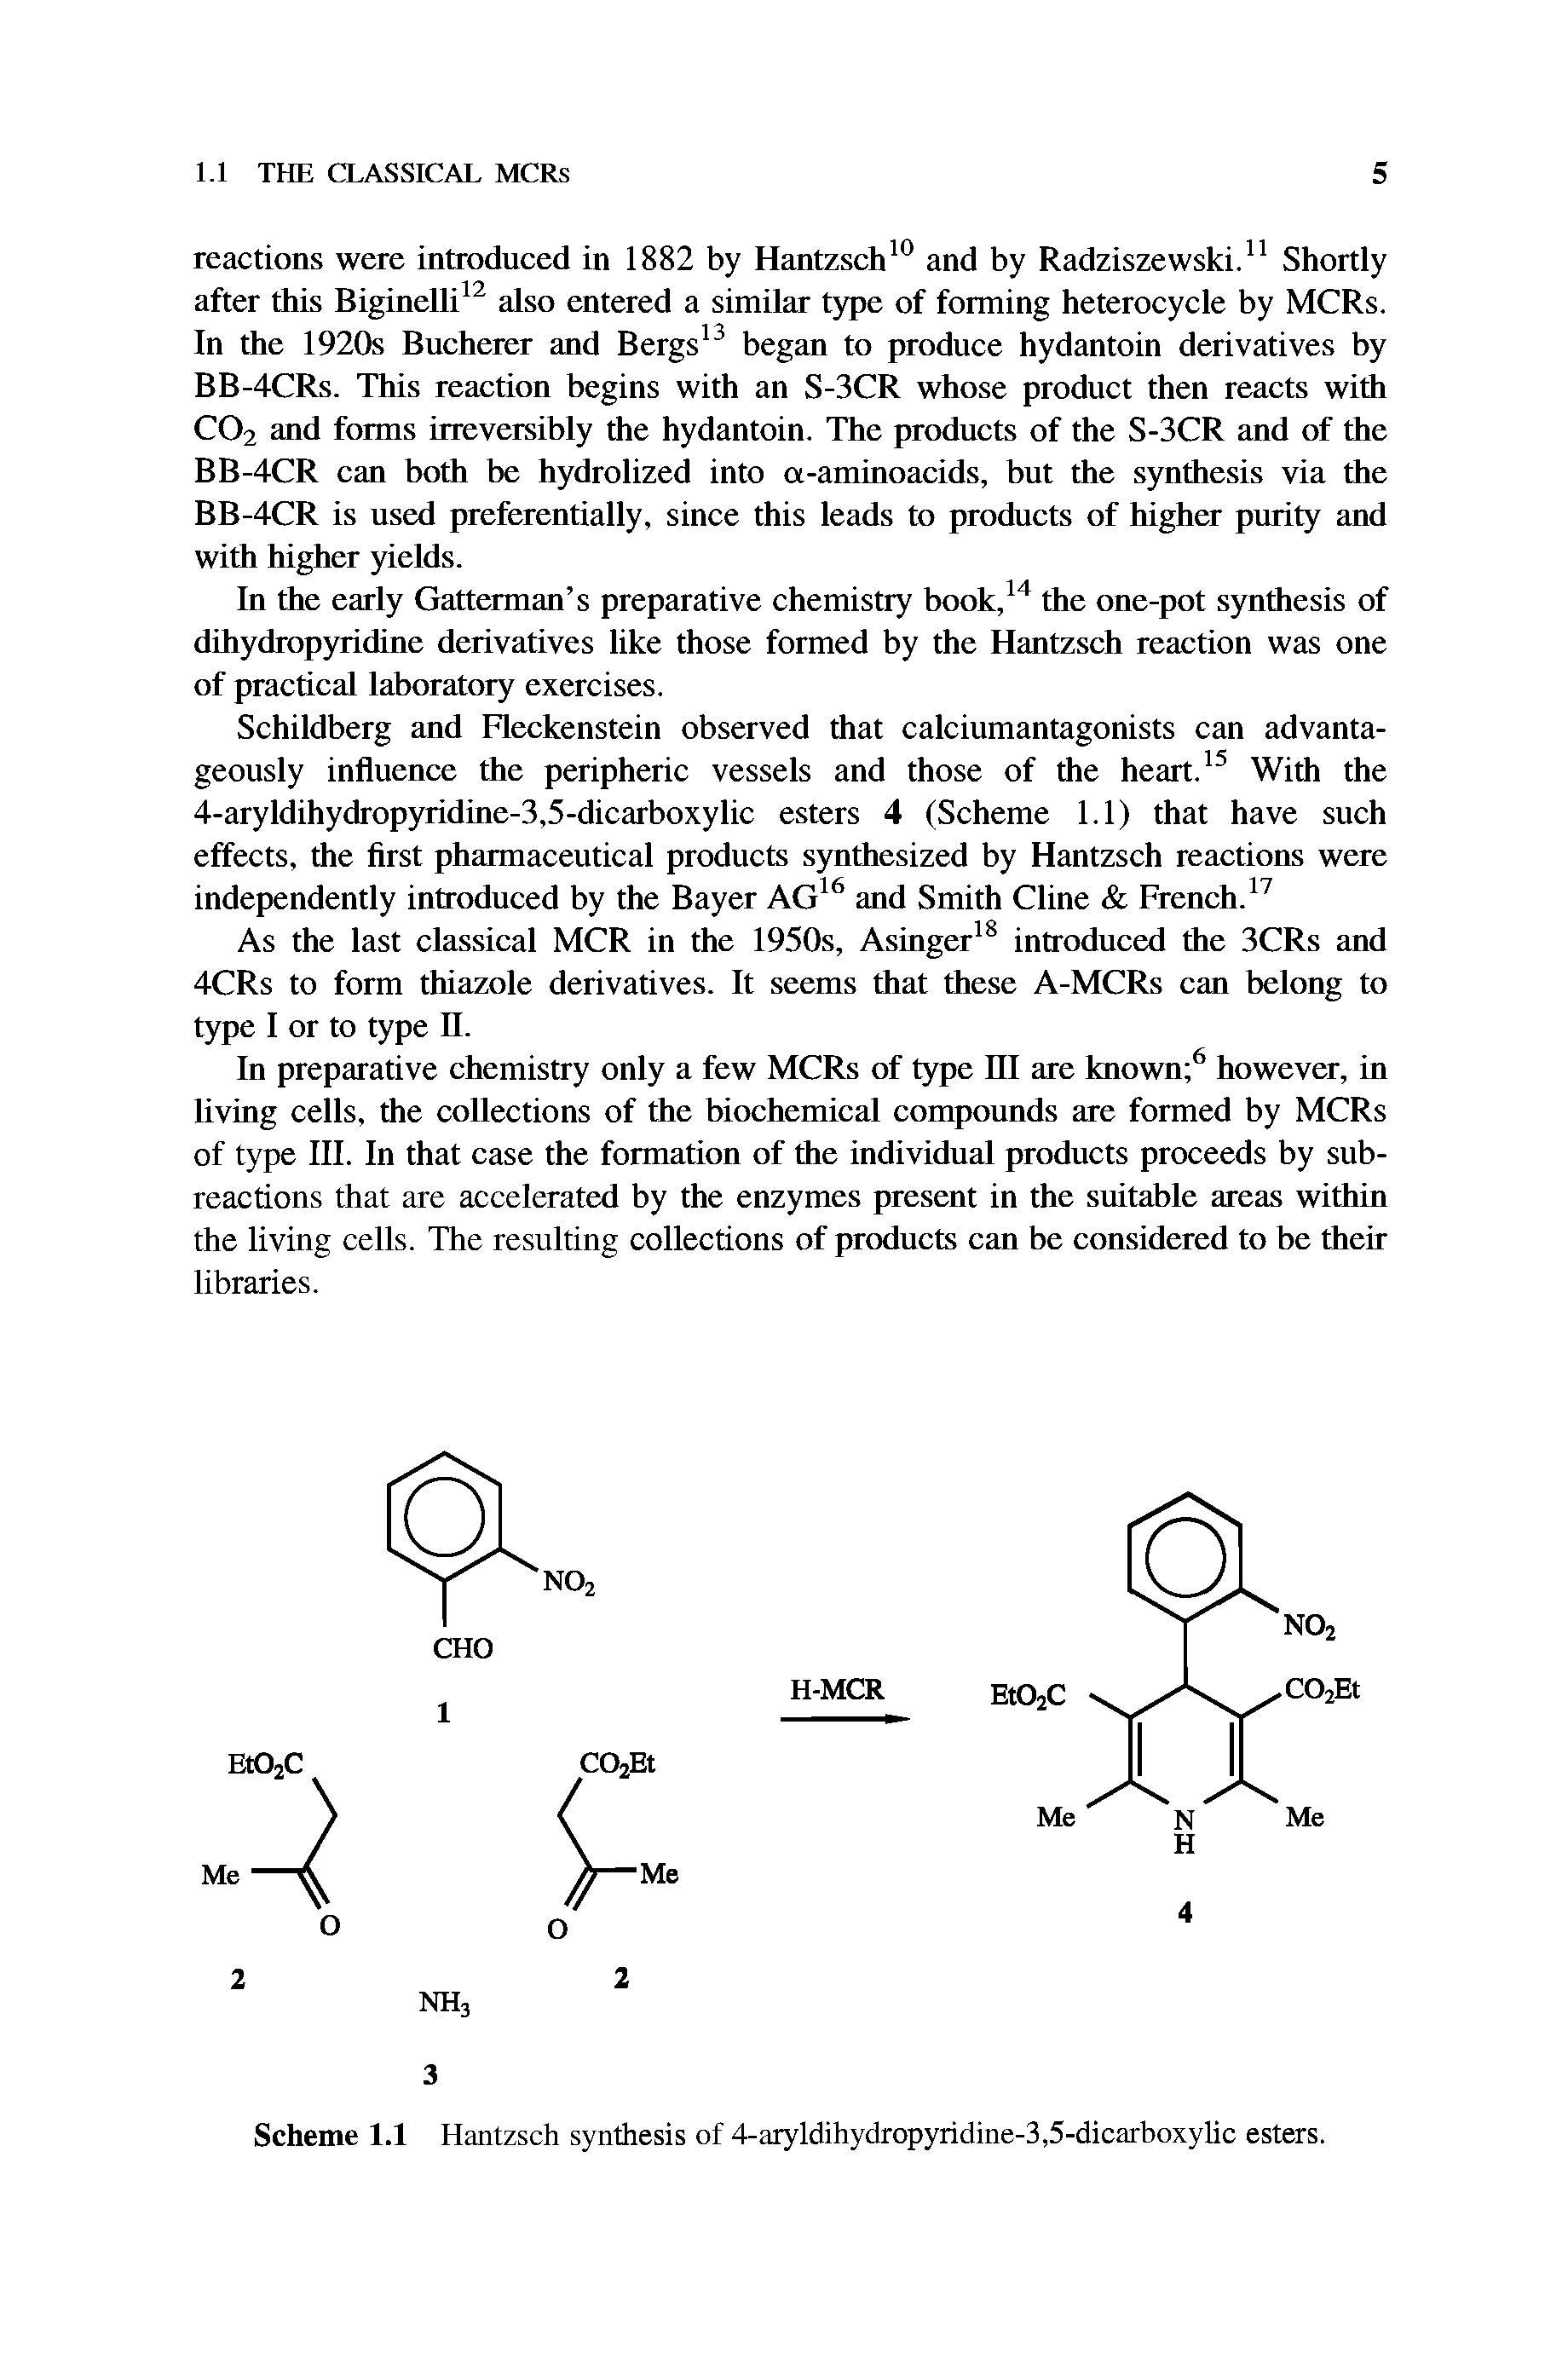 Scheme 1.1 Hantzsch synthesis of 4-aryldihydropyridine-3,5-dicarboxylic esters.